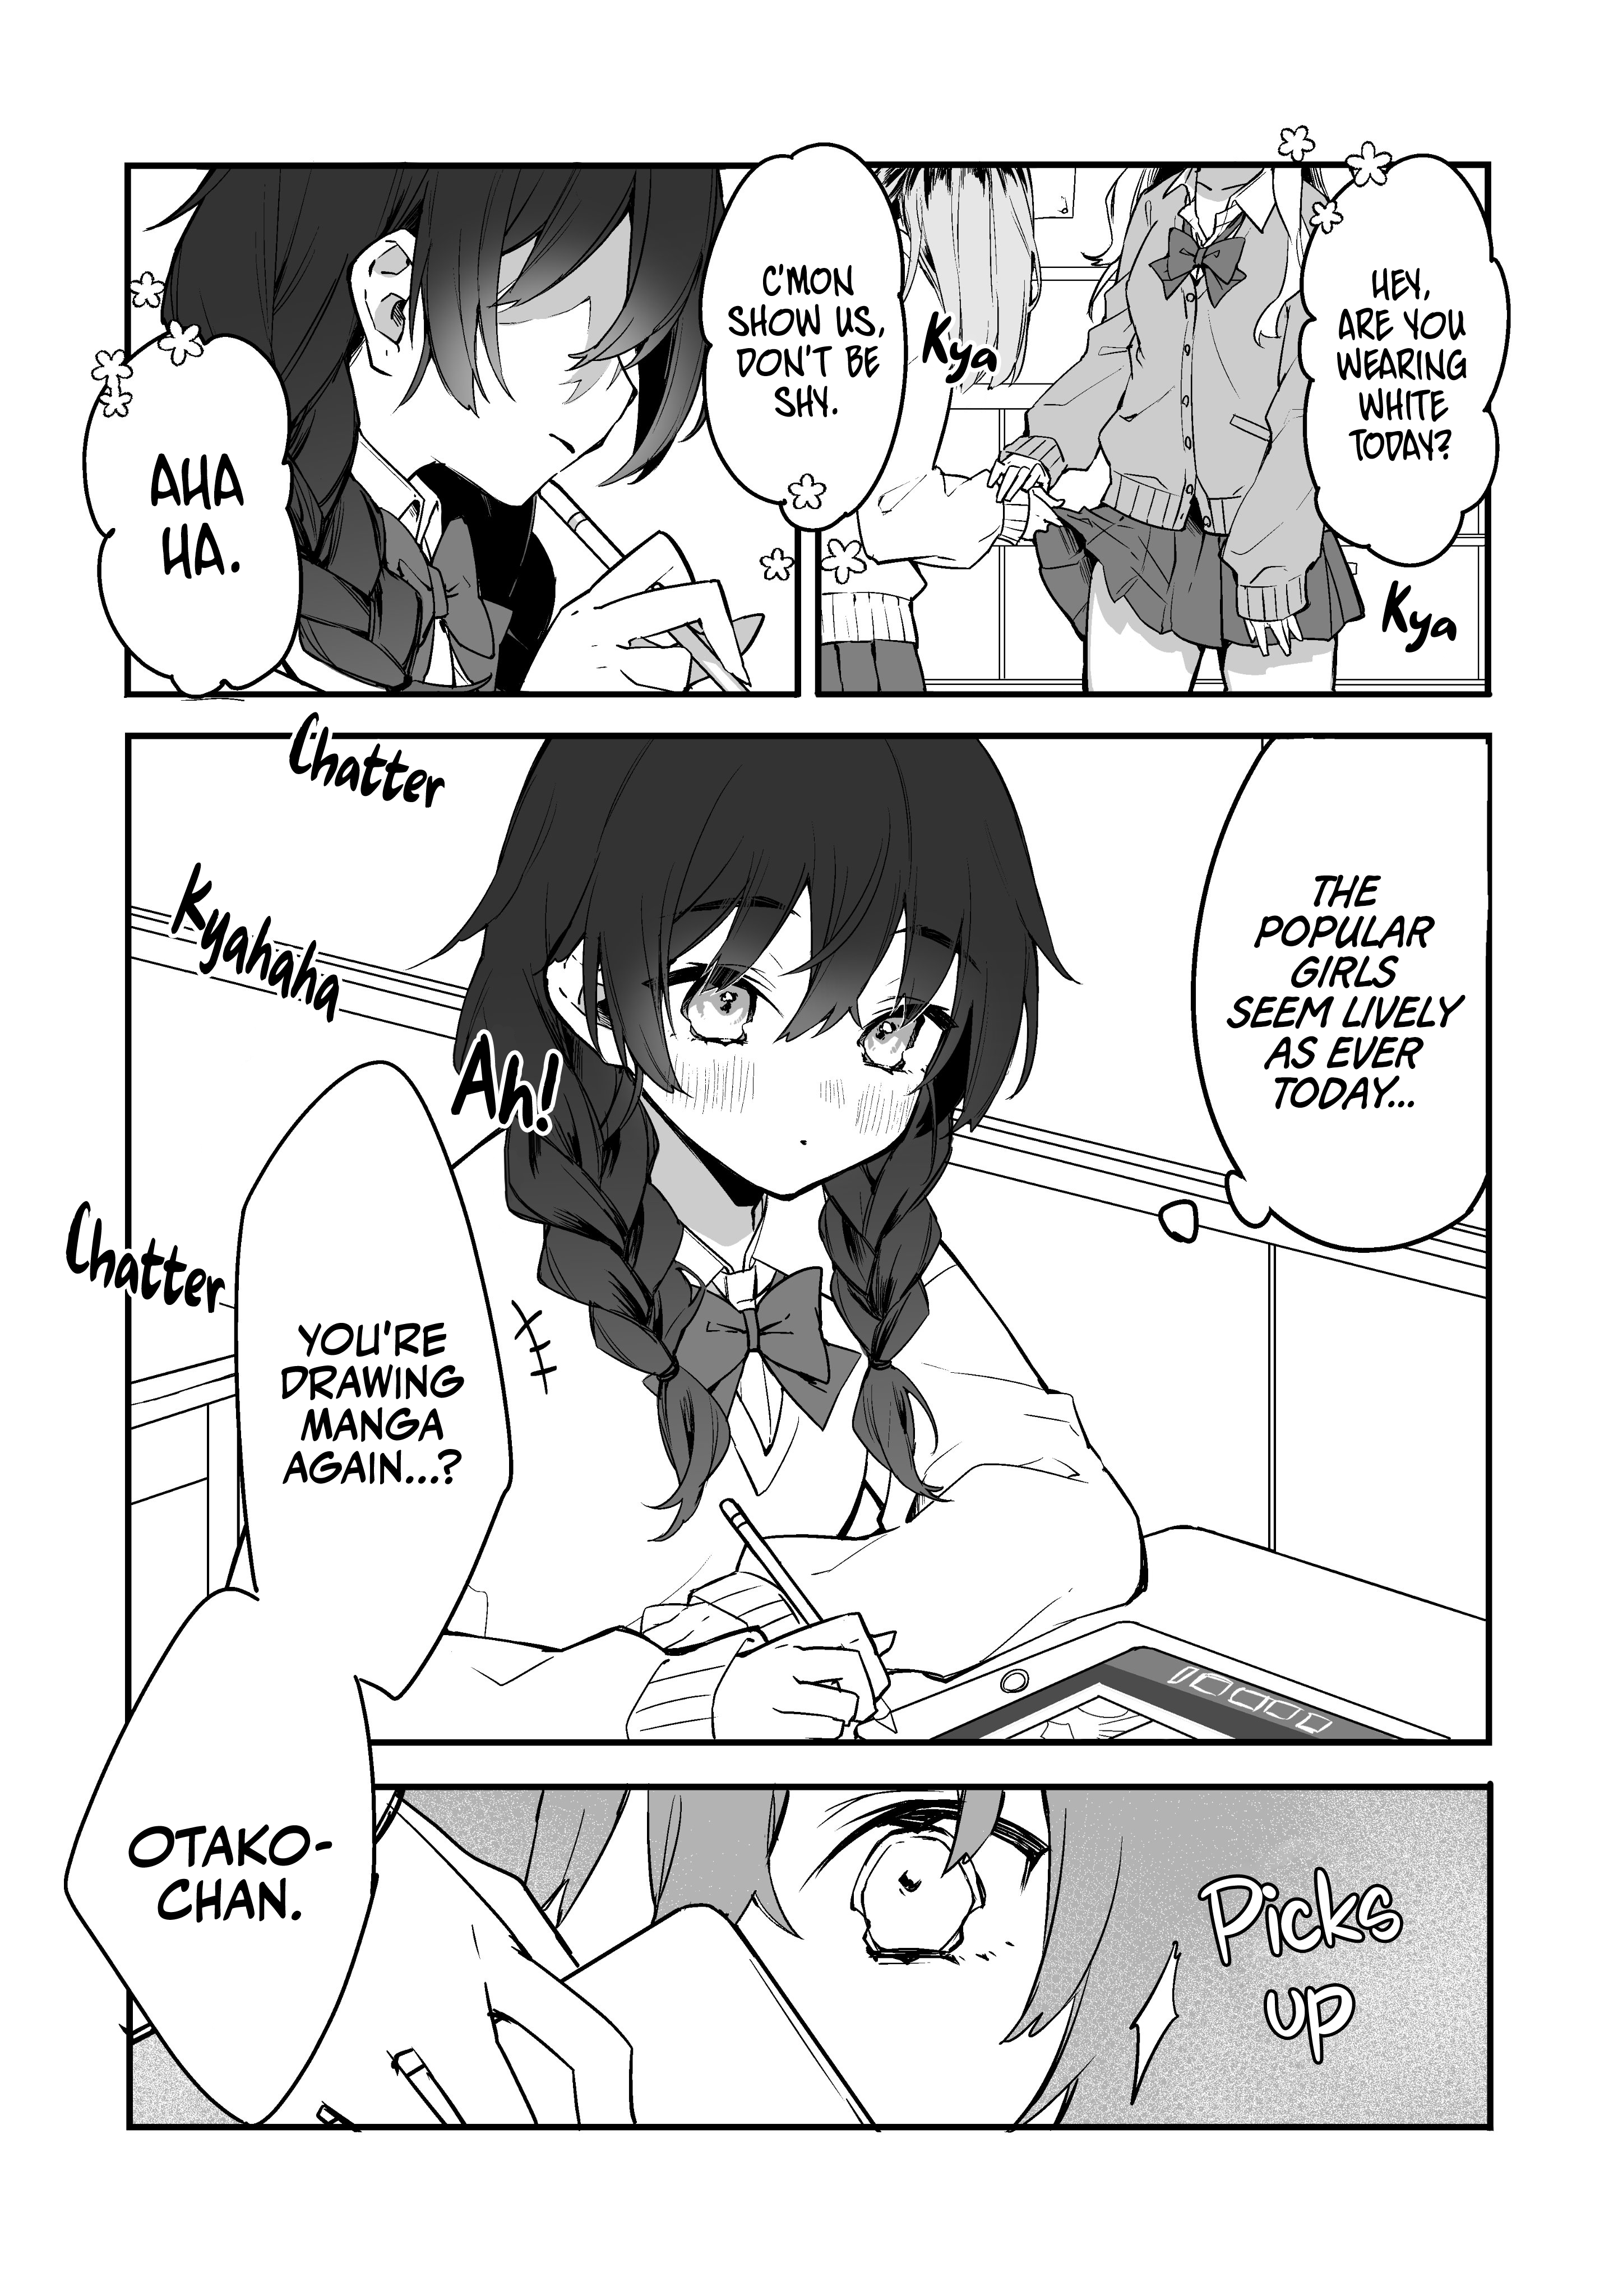 The Popular Girl and the Artist Otako-chan manga